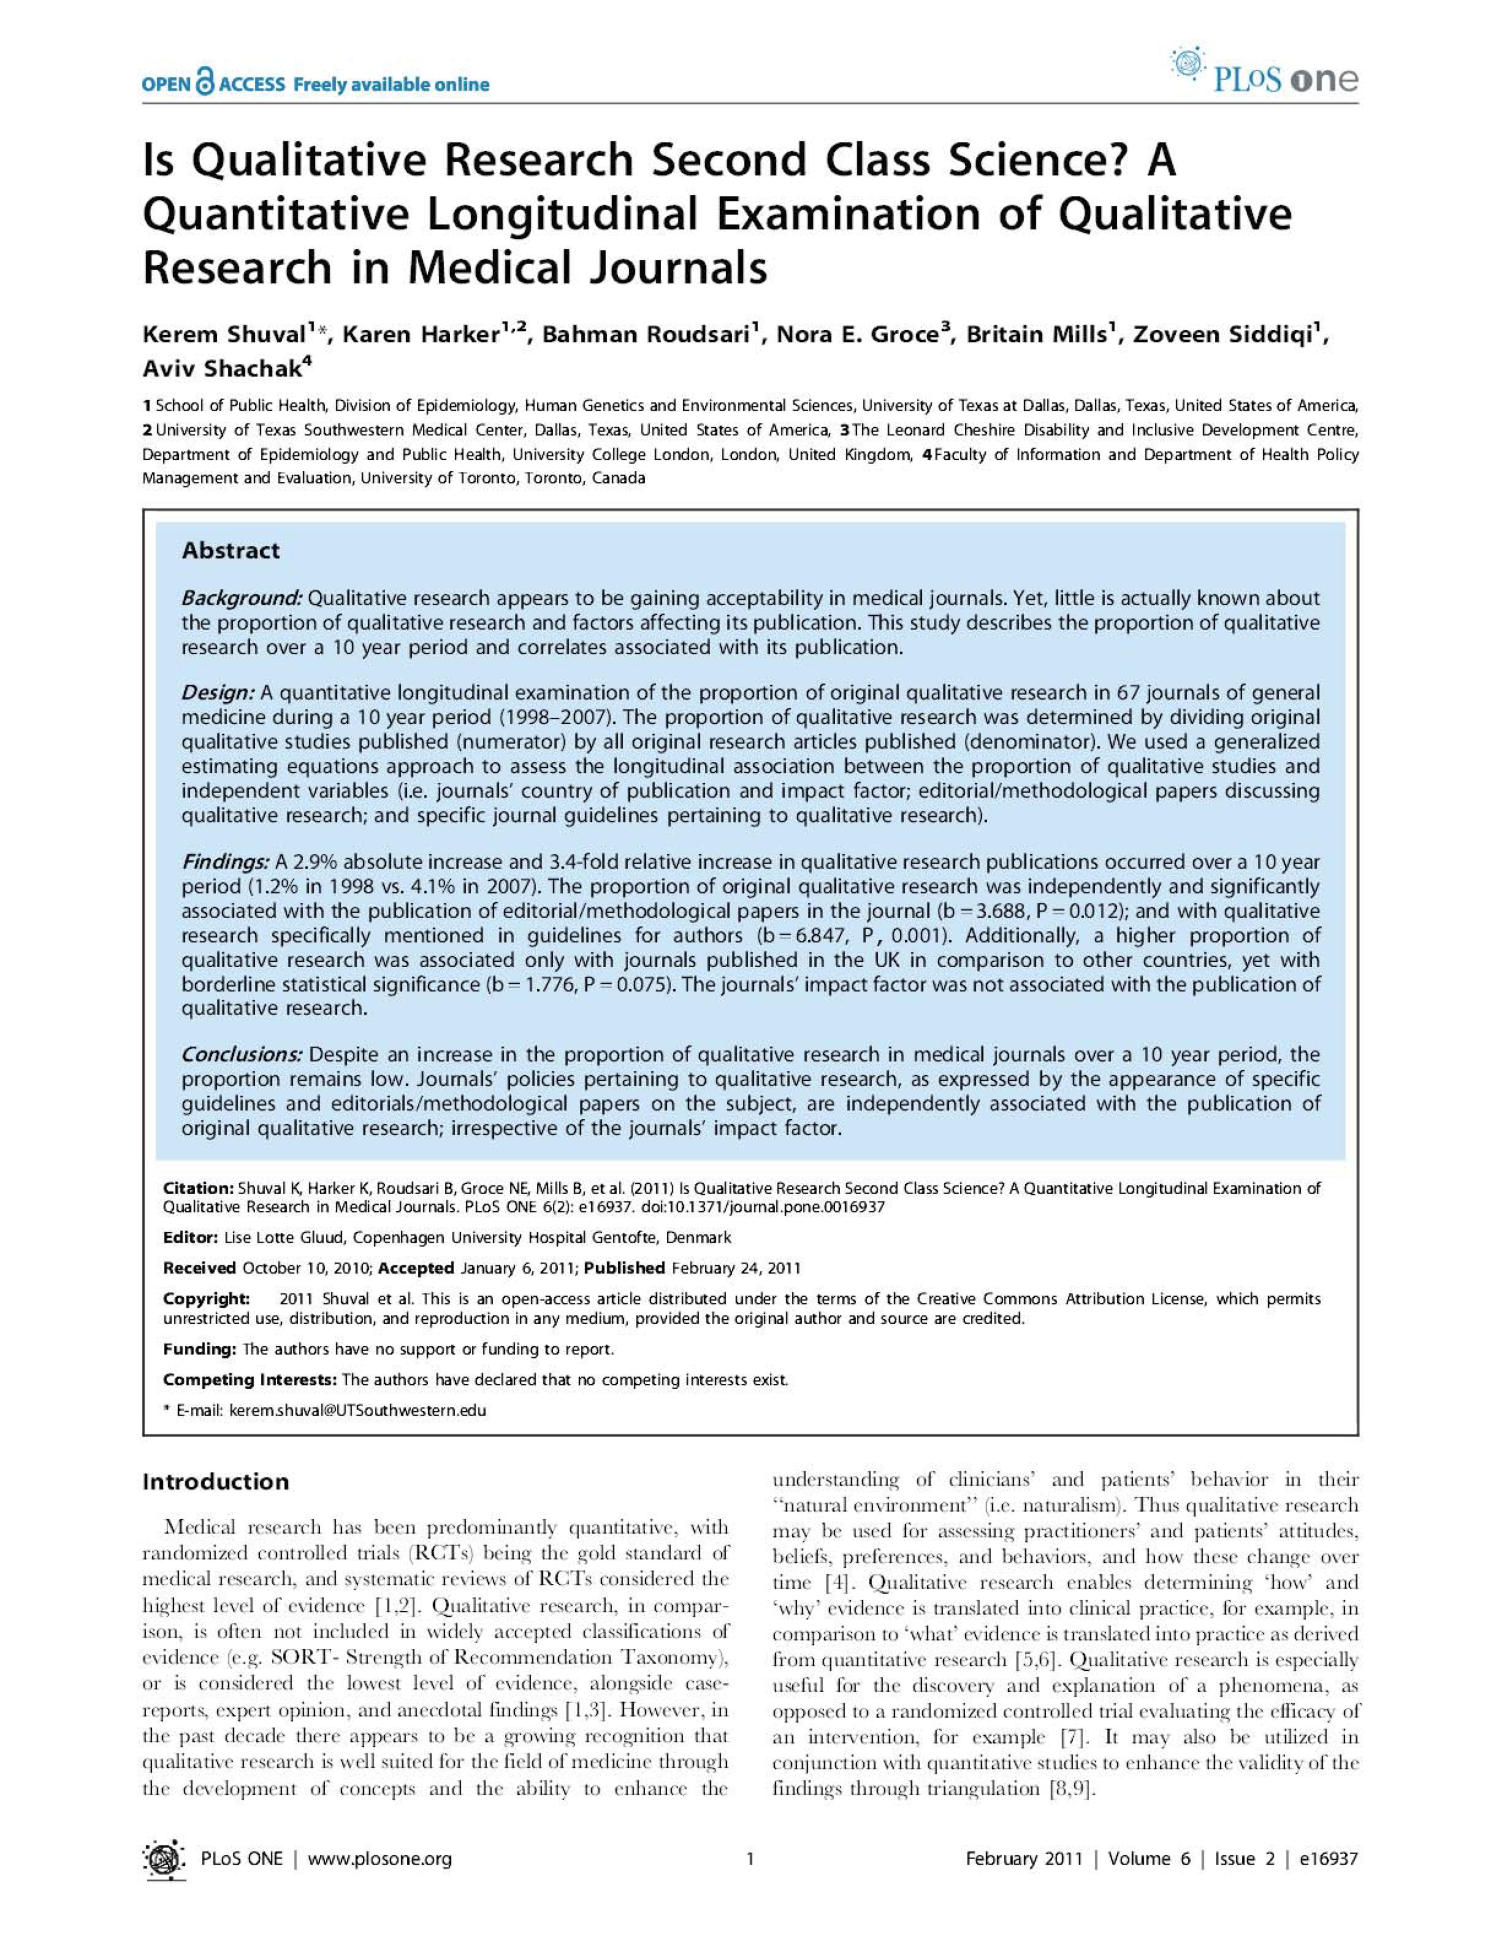 journals that accept qualitative research